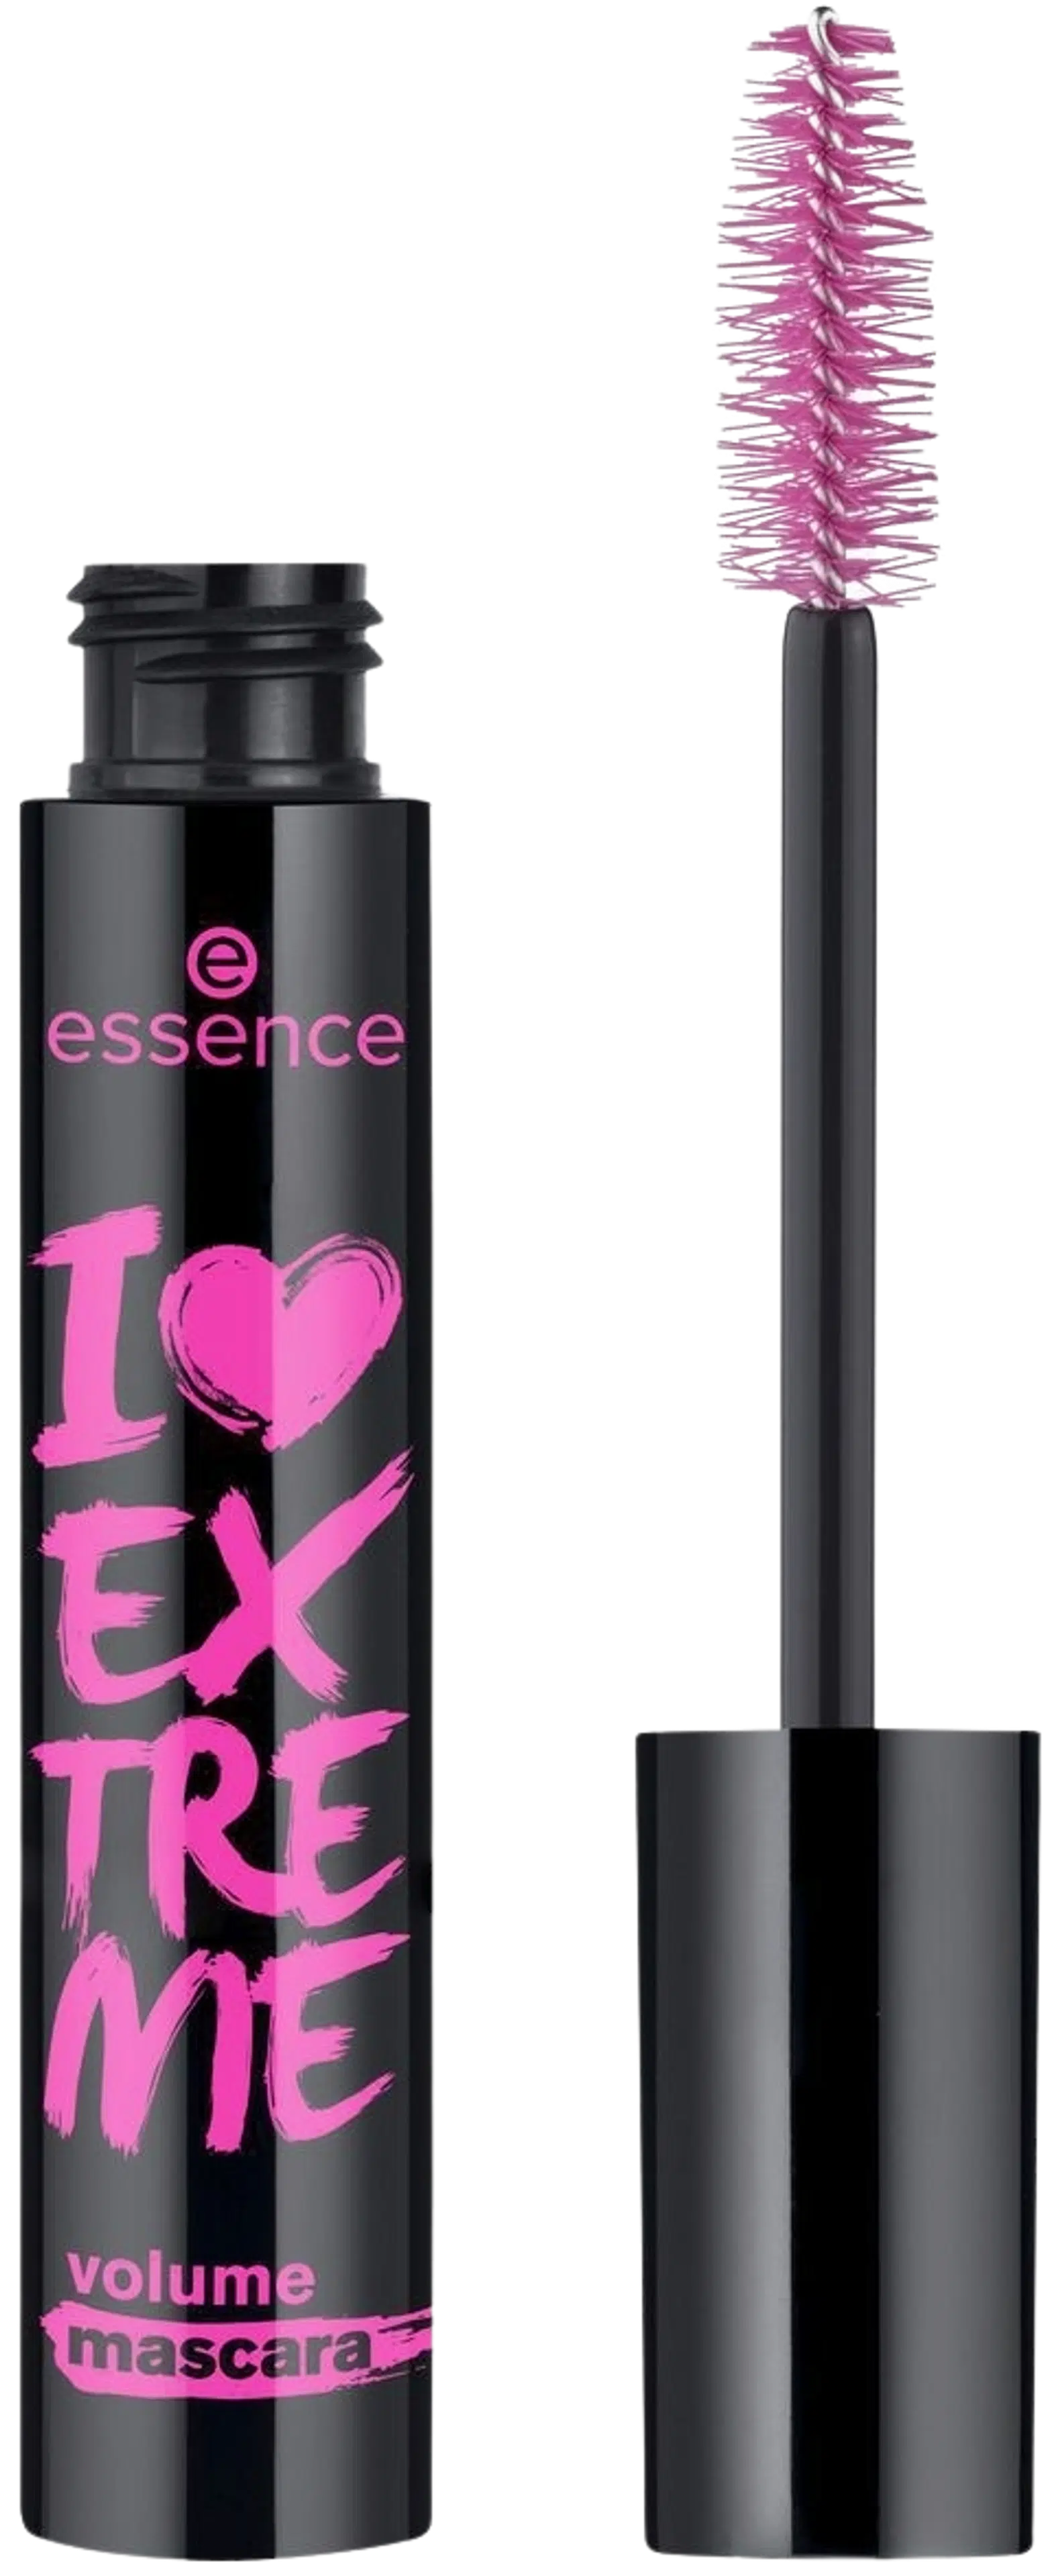 essence I LOVE EXTREME volume mascara 12 ml